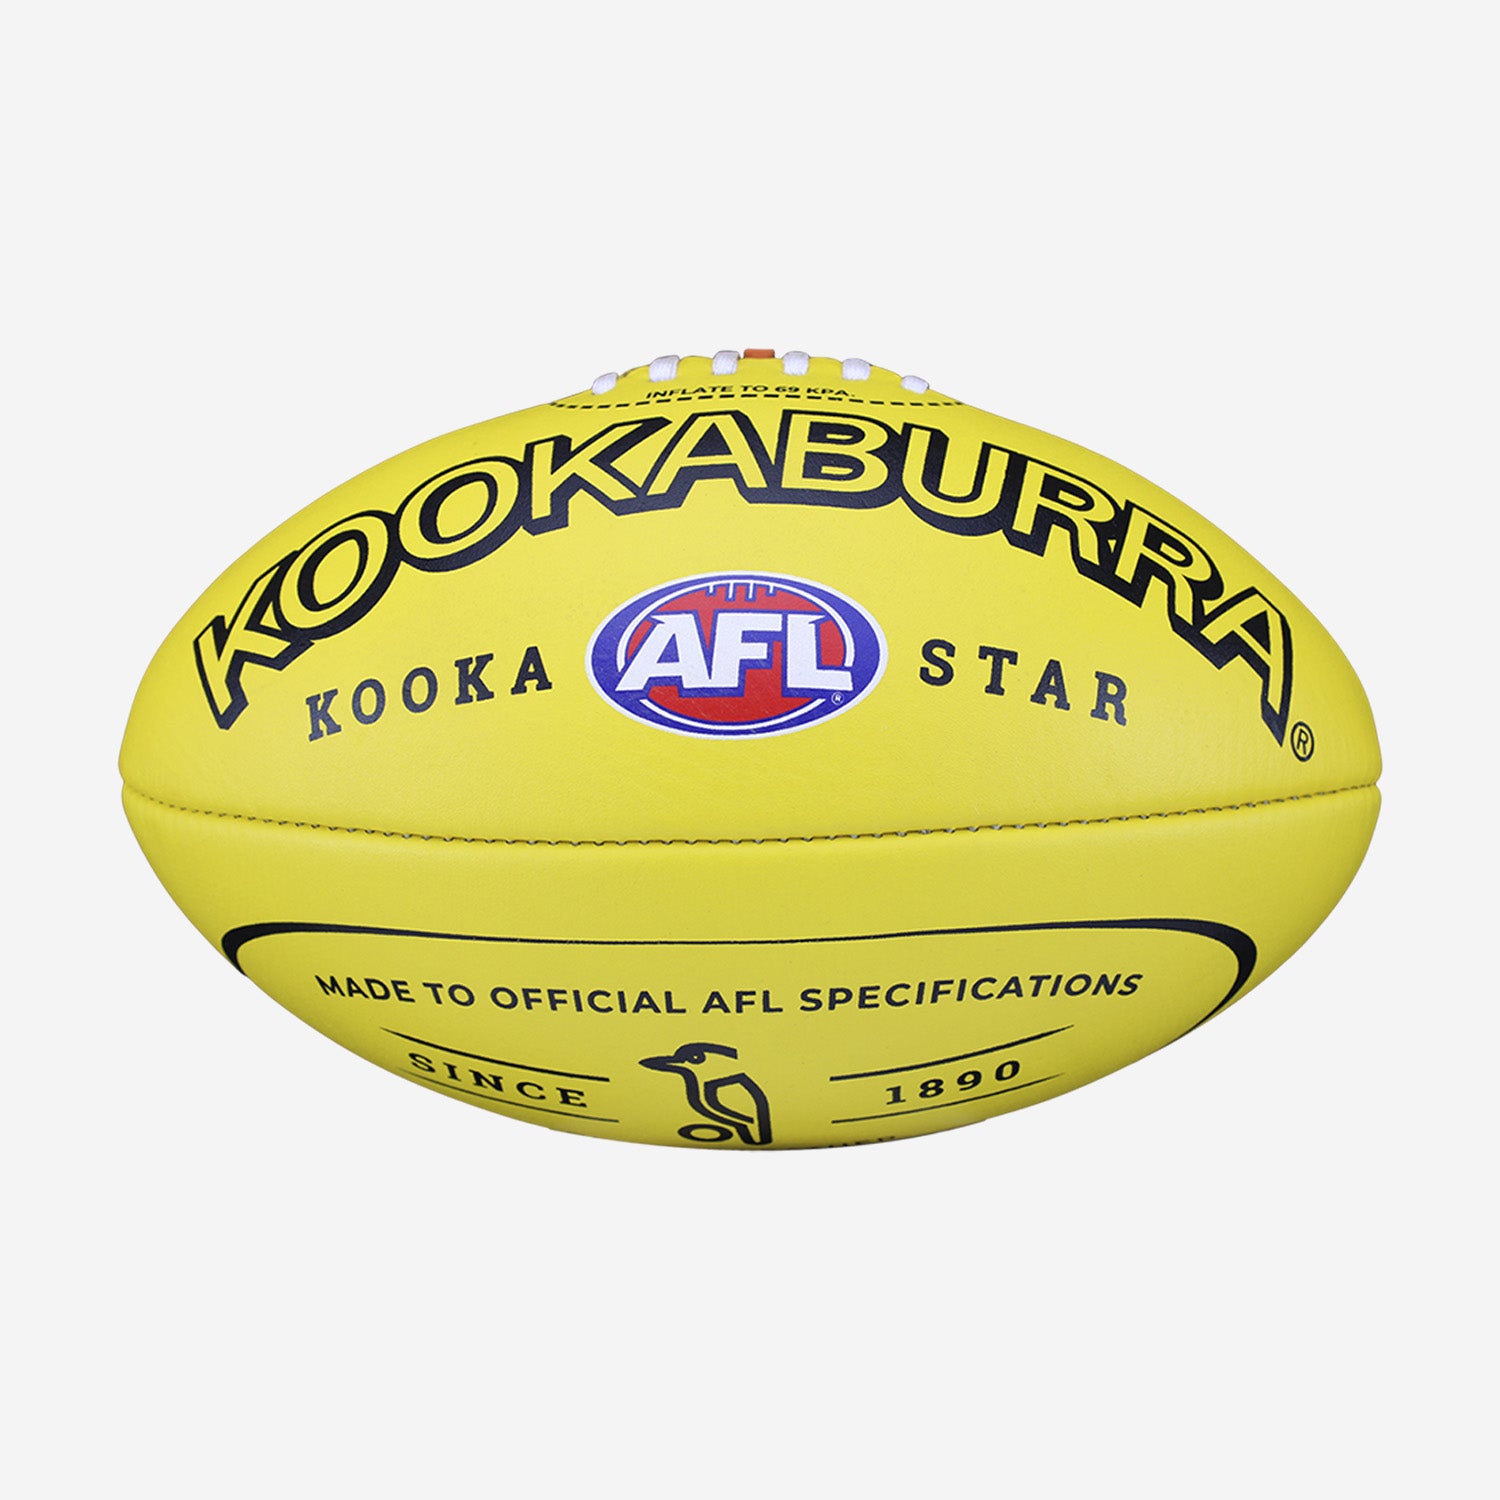 Kookaburra - Star Aussie Rules Football